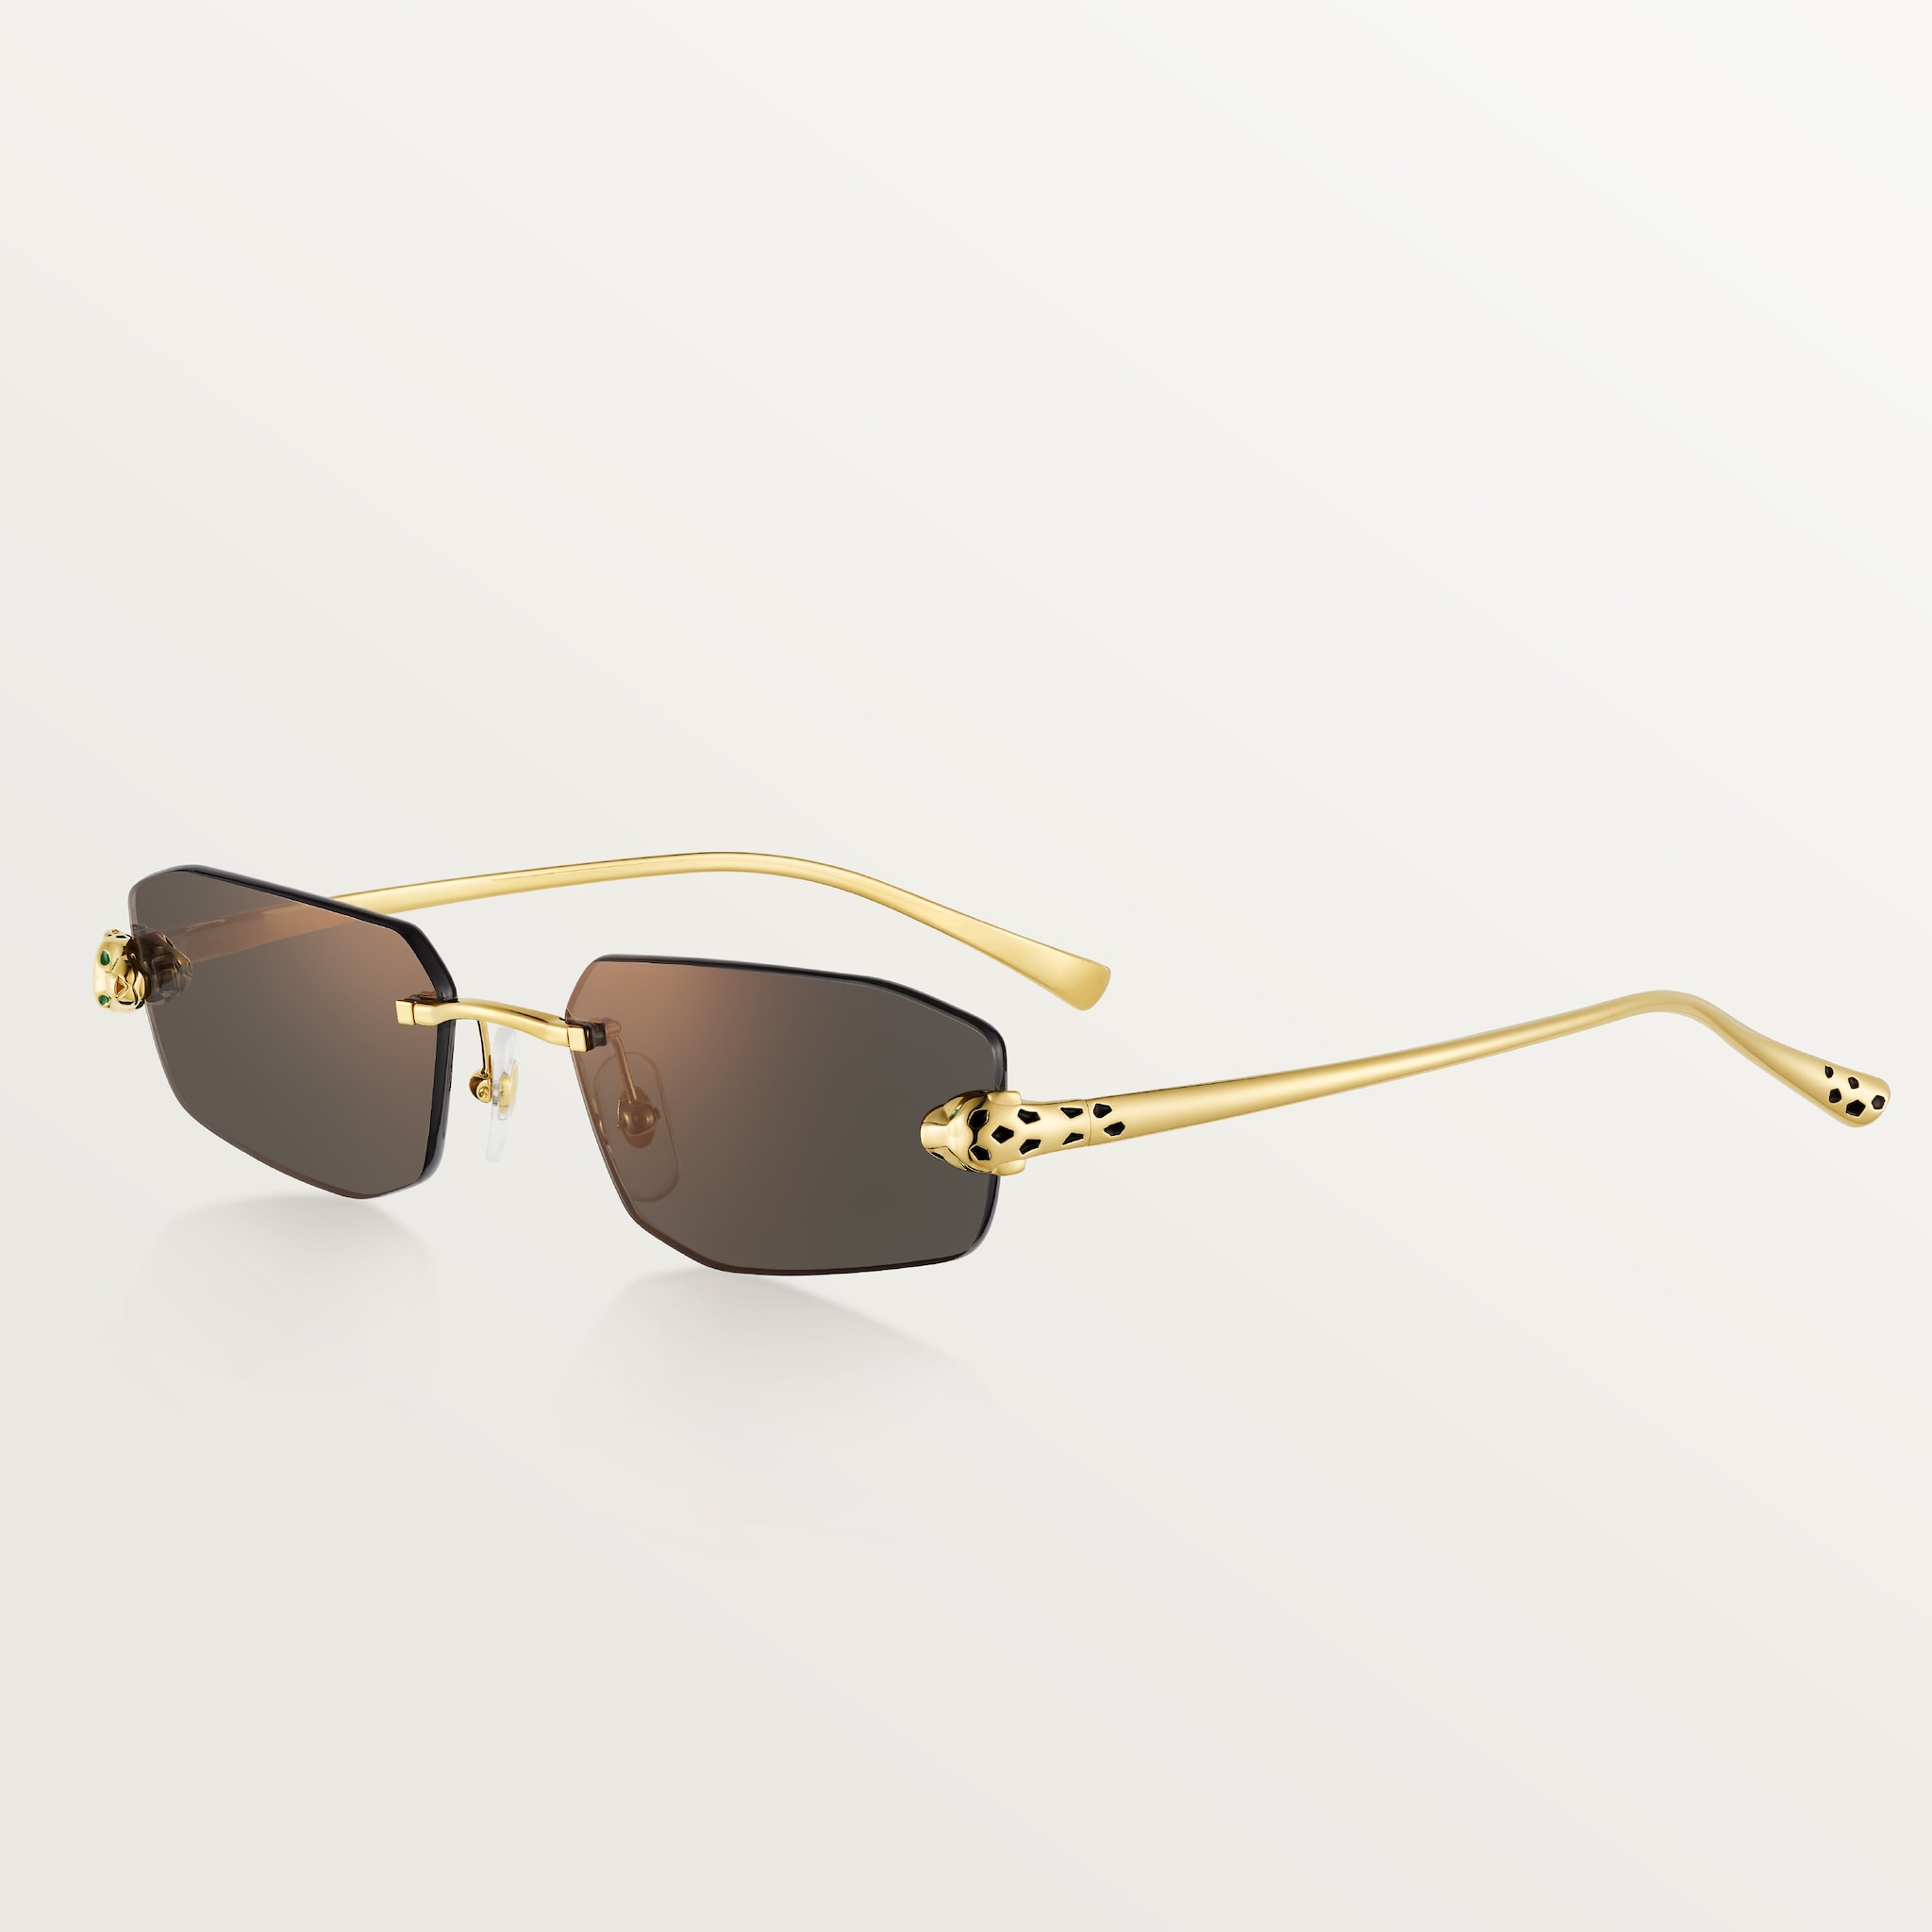 Panthère de Cartier SunglassesSmooth golden-finish metal, grey lenses